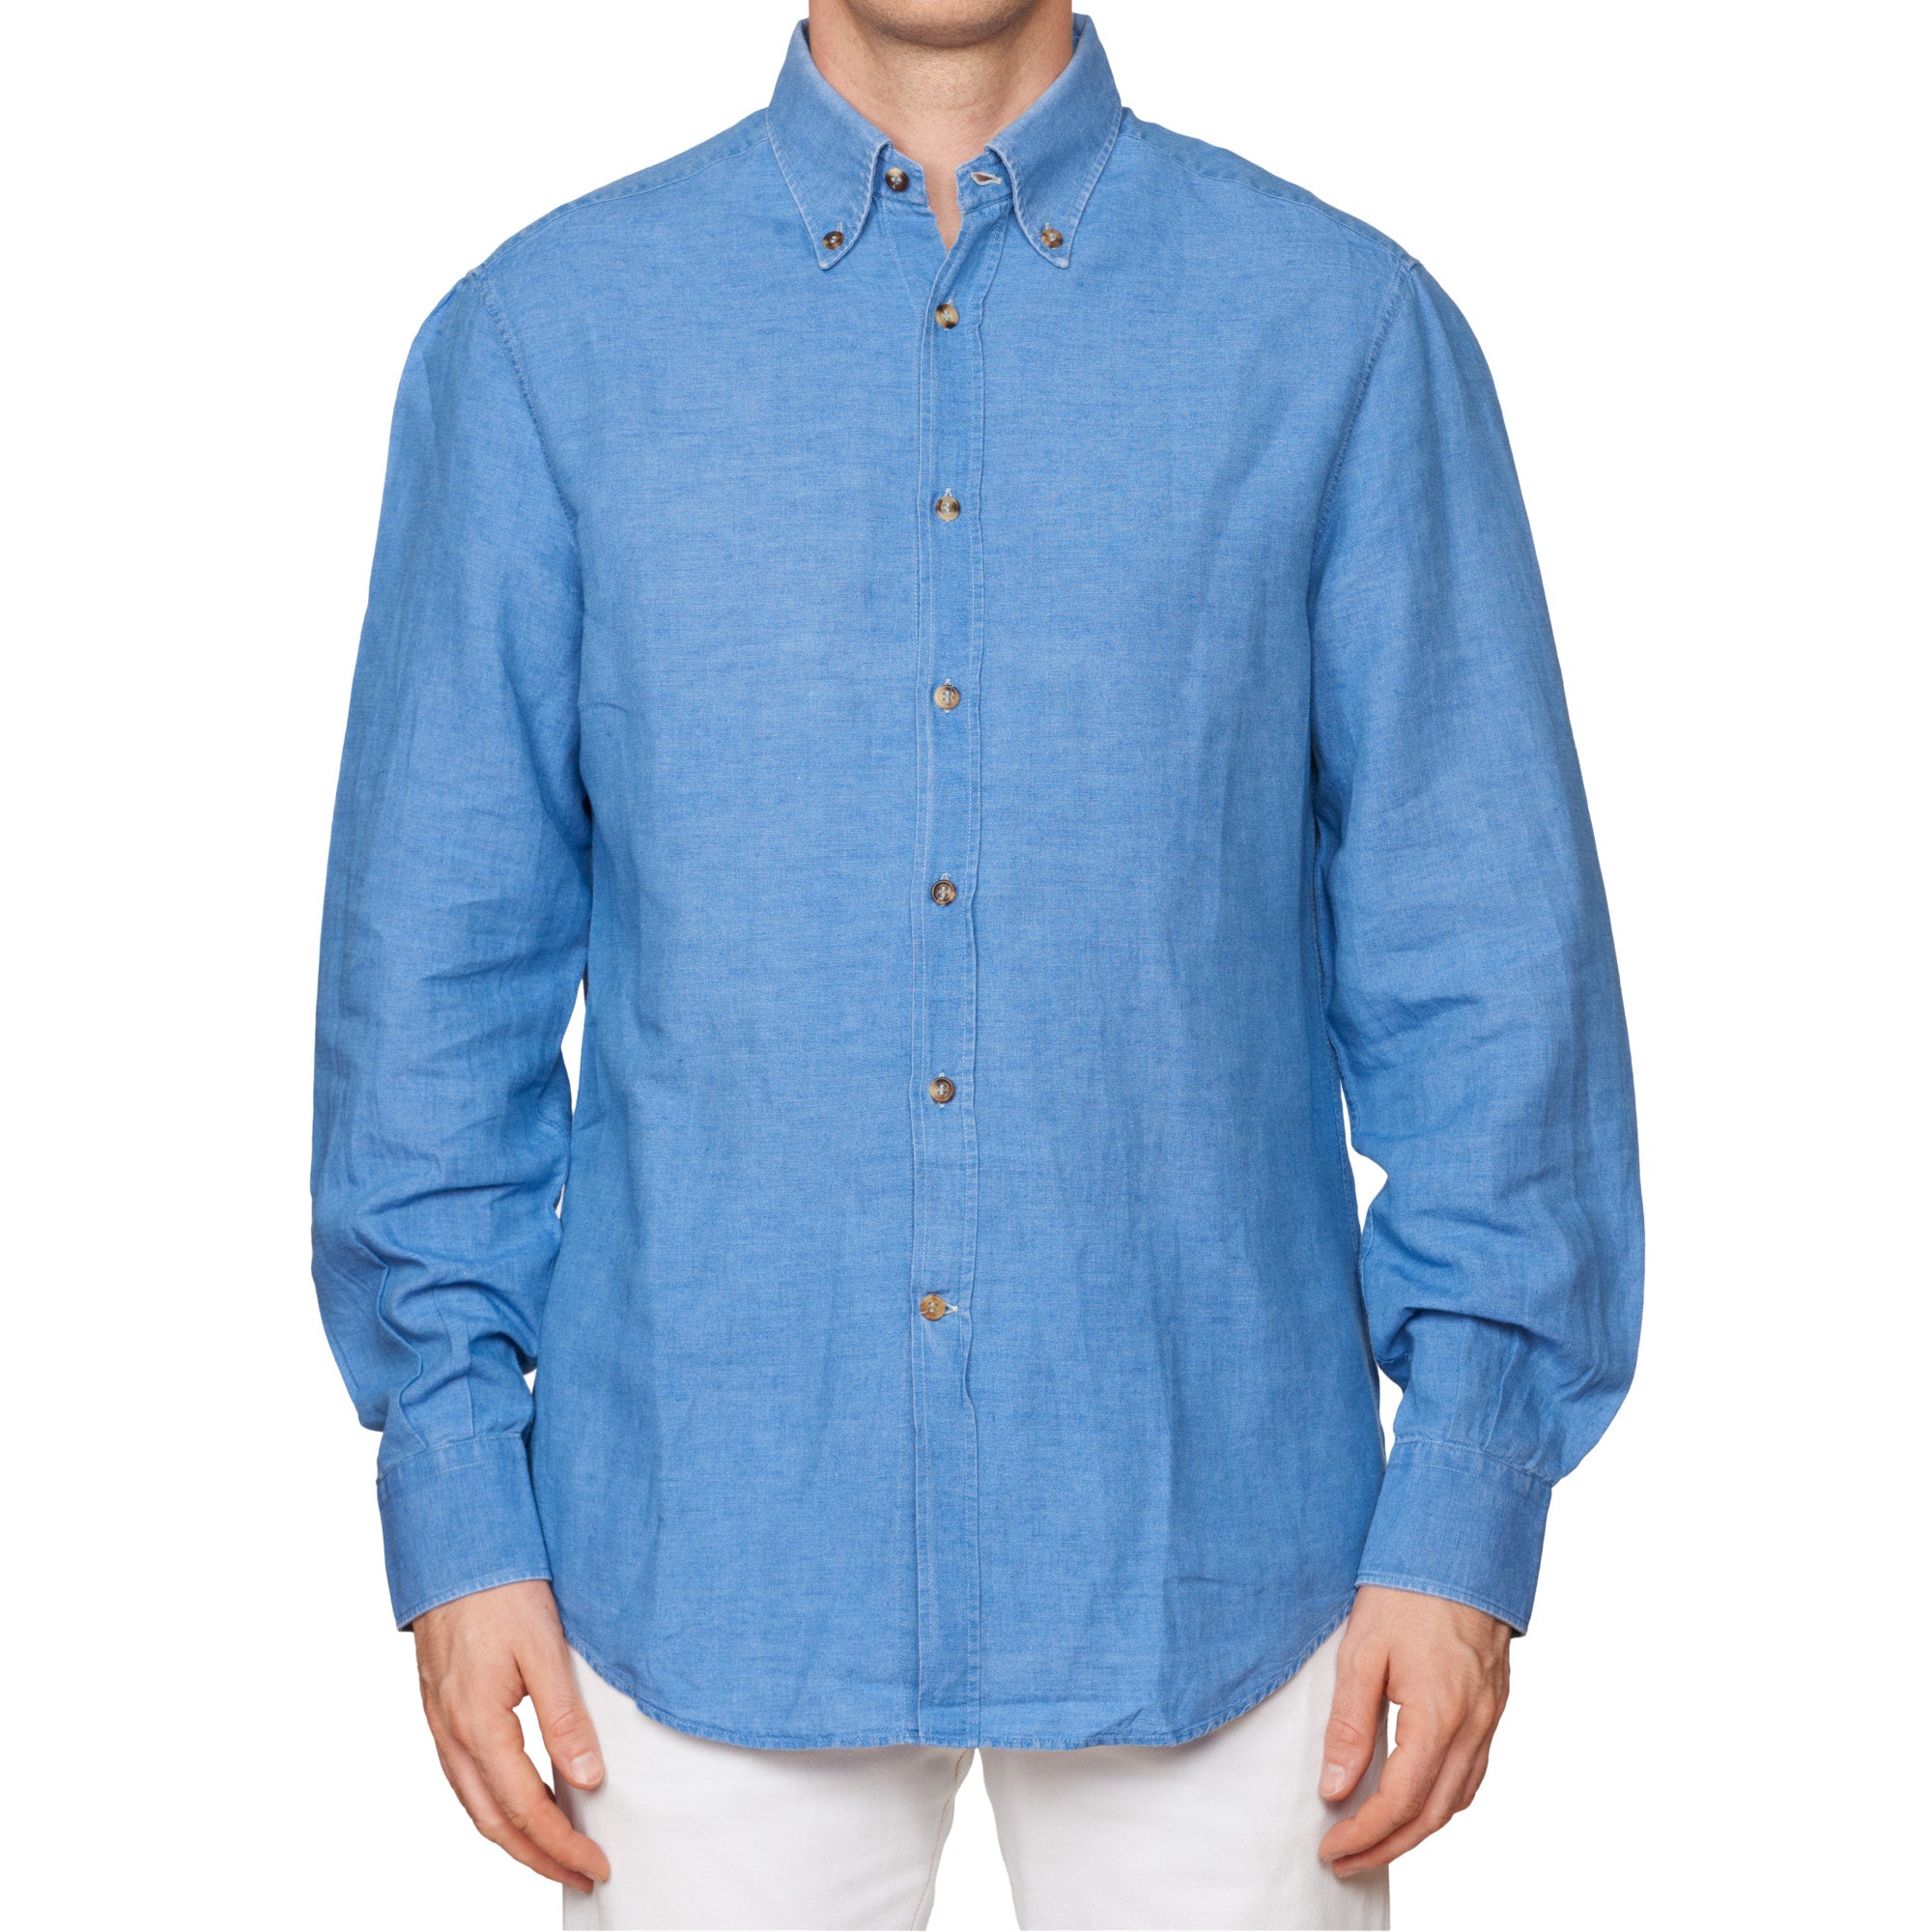 BRUNELLO CUCINELLI Solid Blue Linen-Cotton Button-Down Casual Shirt Size M Basic Fit